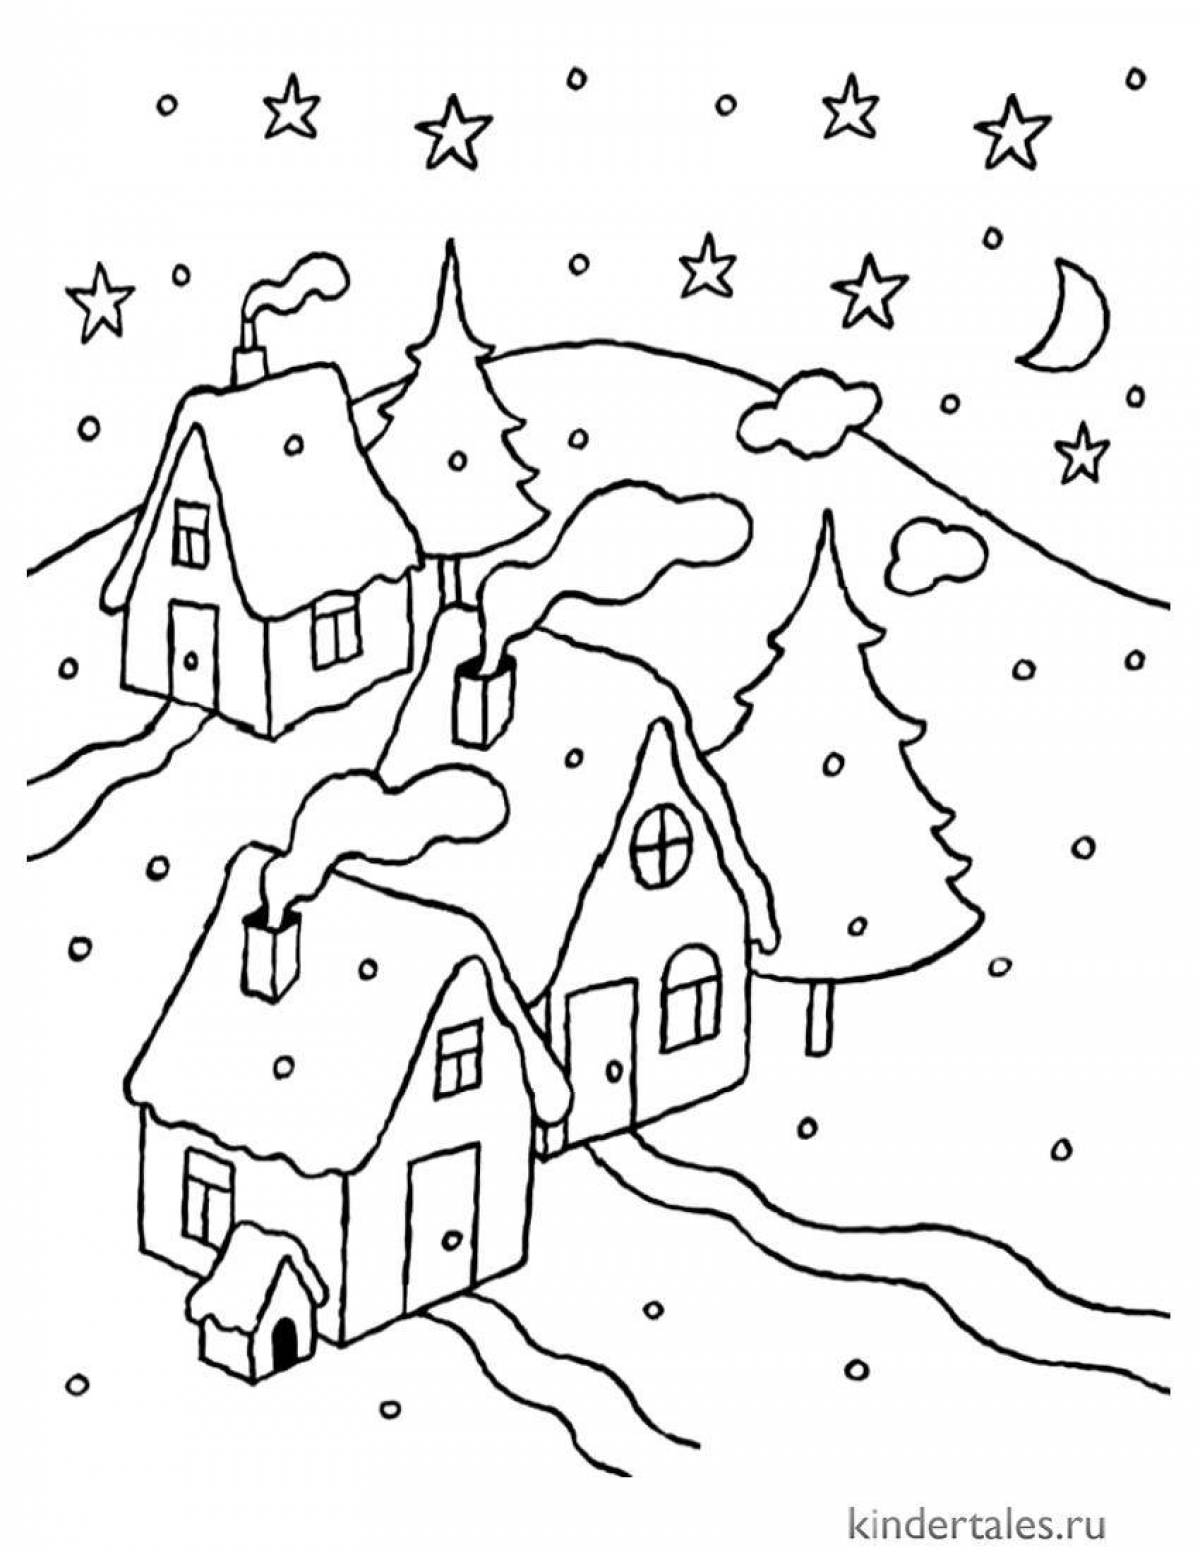 Luminous winter landscape coloring book for kids